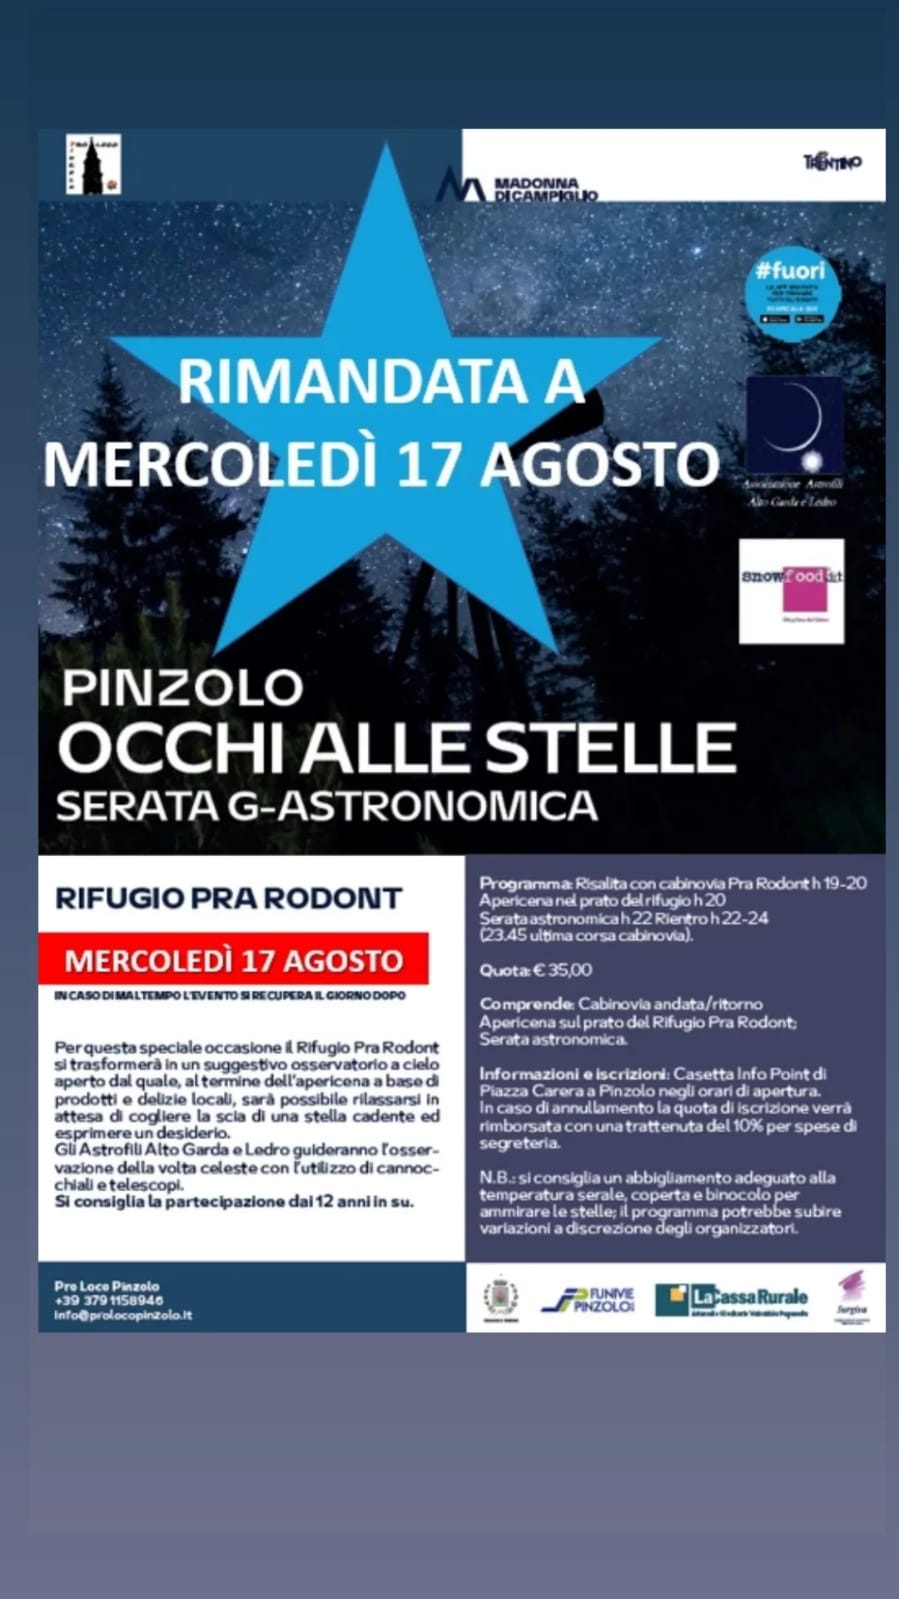 Serata G-astronomica rimandata a mercoledì 17 agosto